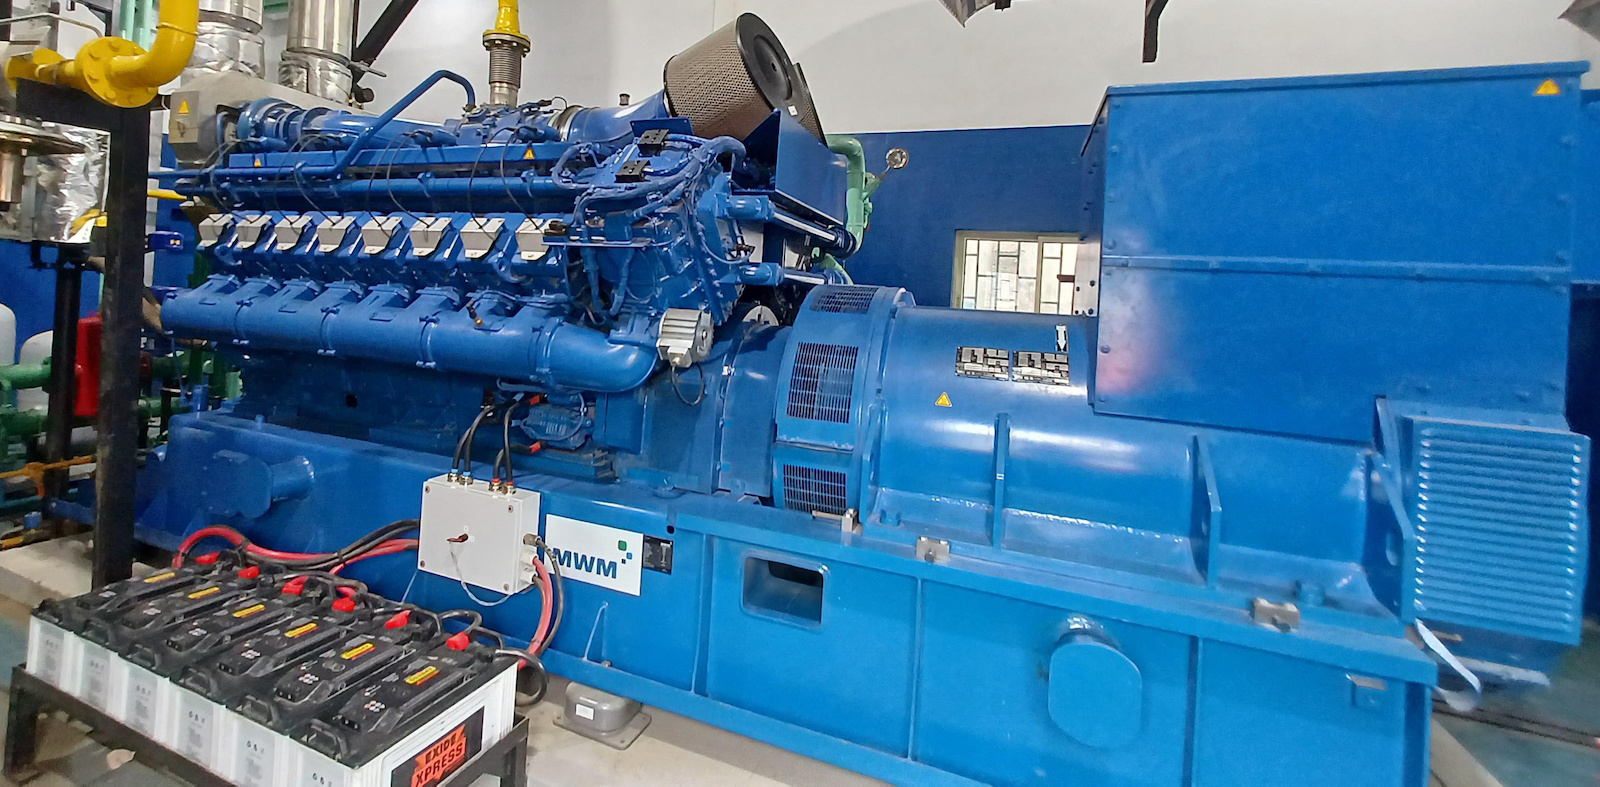 A new MWM TCG 3020 V16 Gas Engine for Panar Group of Companies in Nigeria. © Green Power International